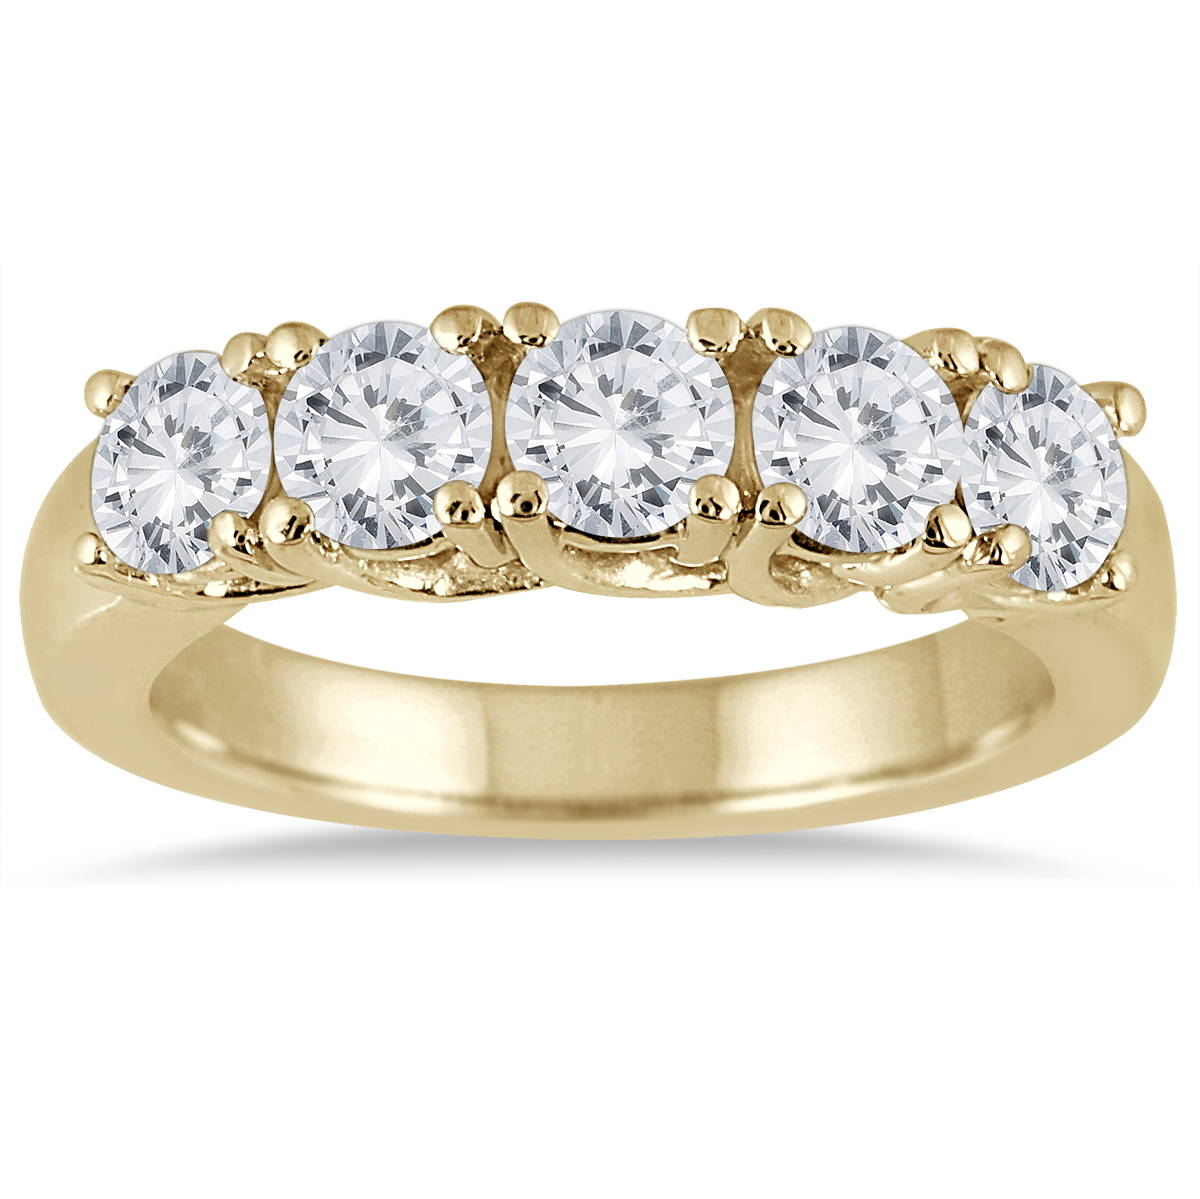 2 Carat TW Five Stone Diamond Wedding Band in 14K Yellow Gold